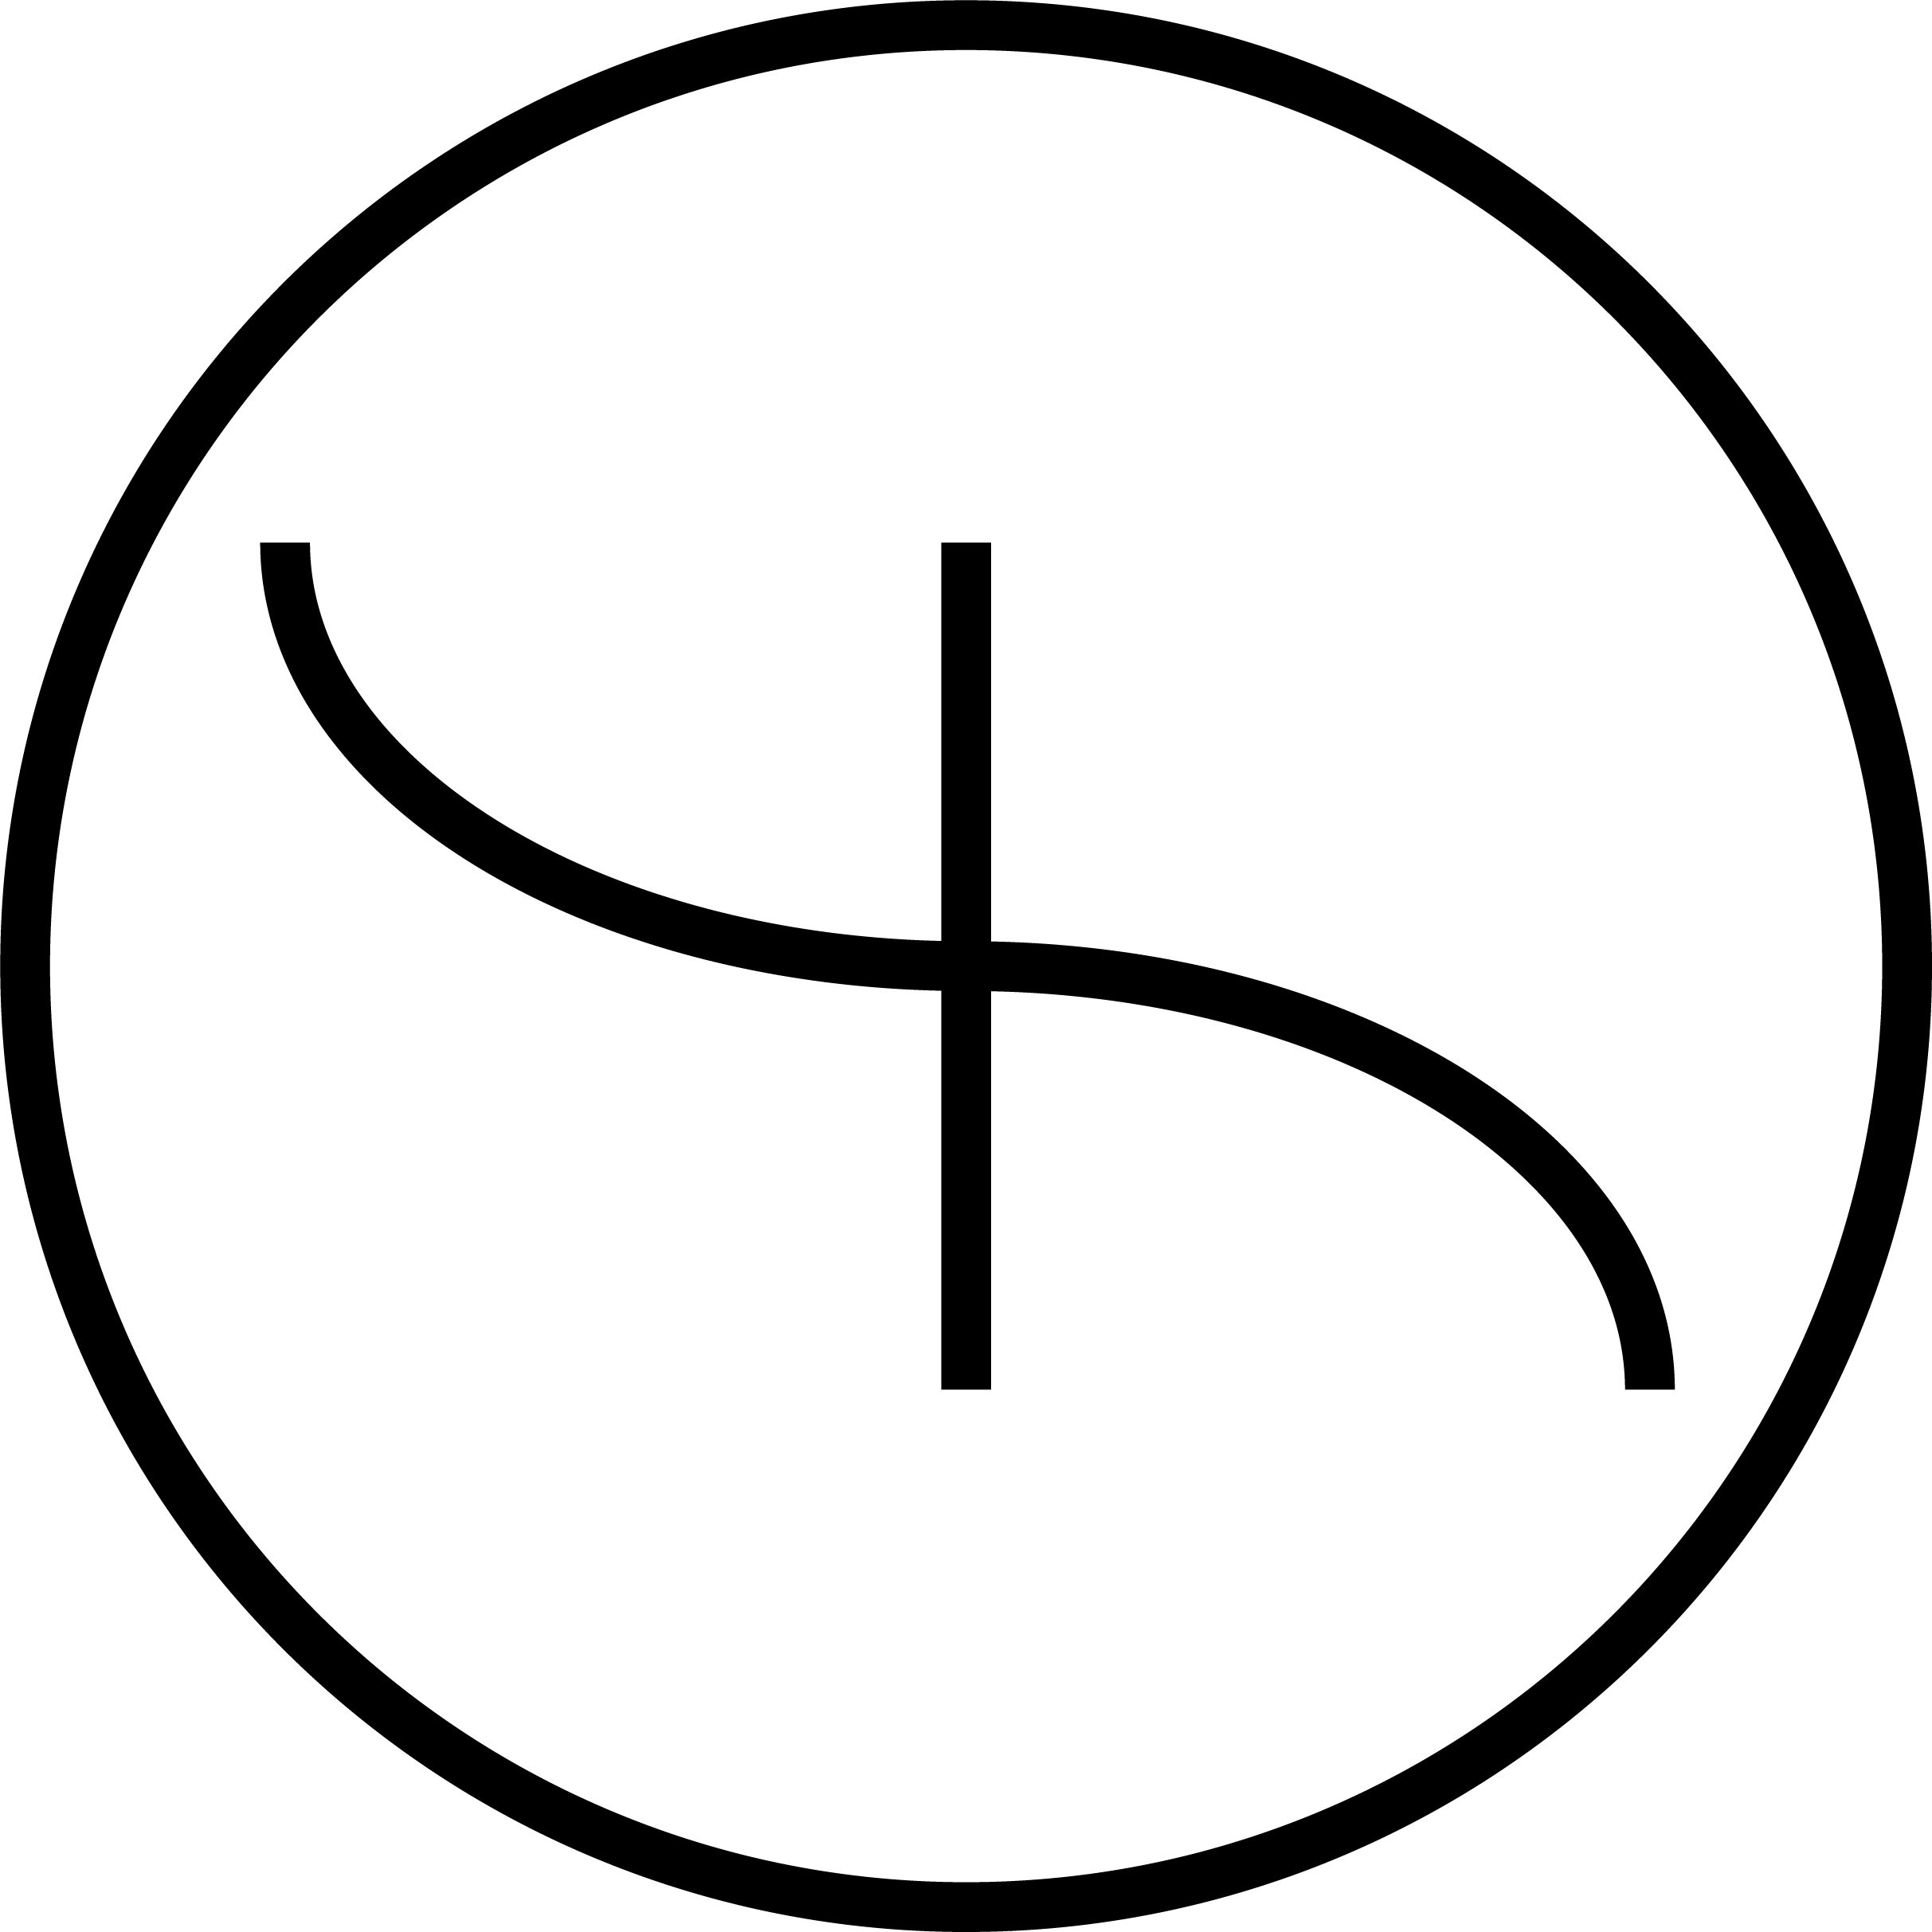 SkilledWeb logo; Inverse logo; Inverse d.o.o. logo